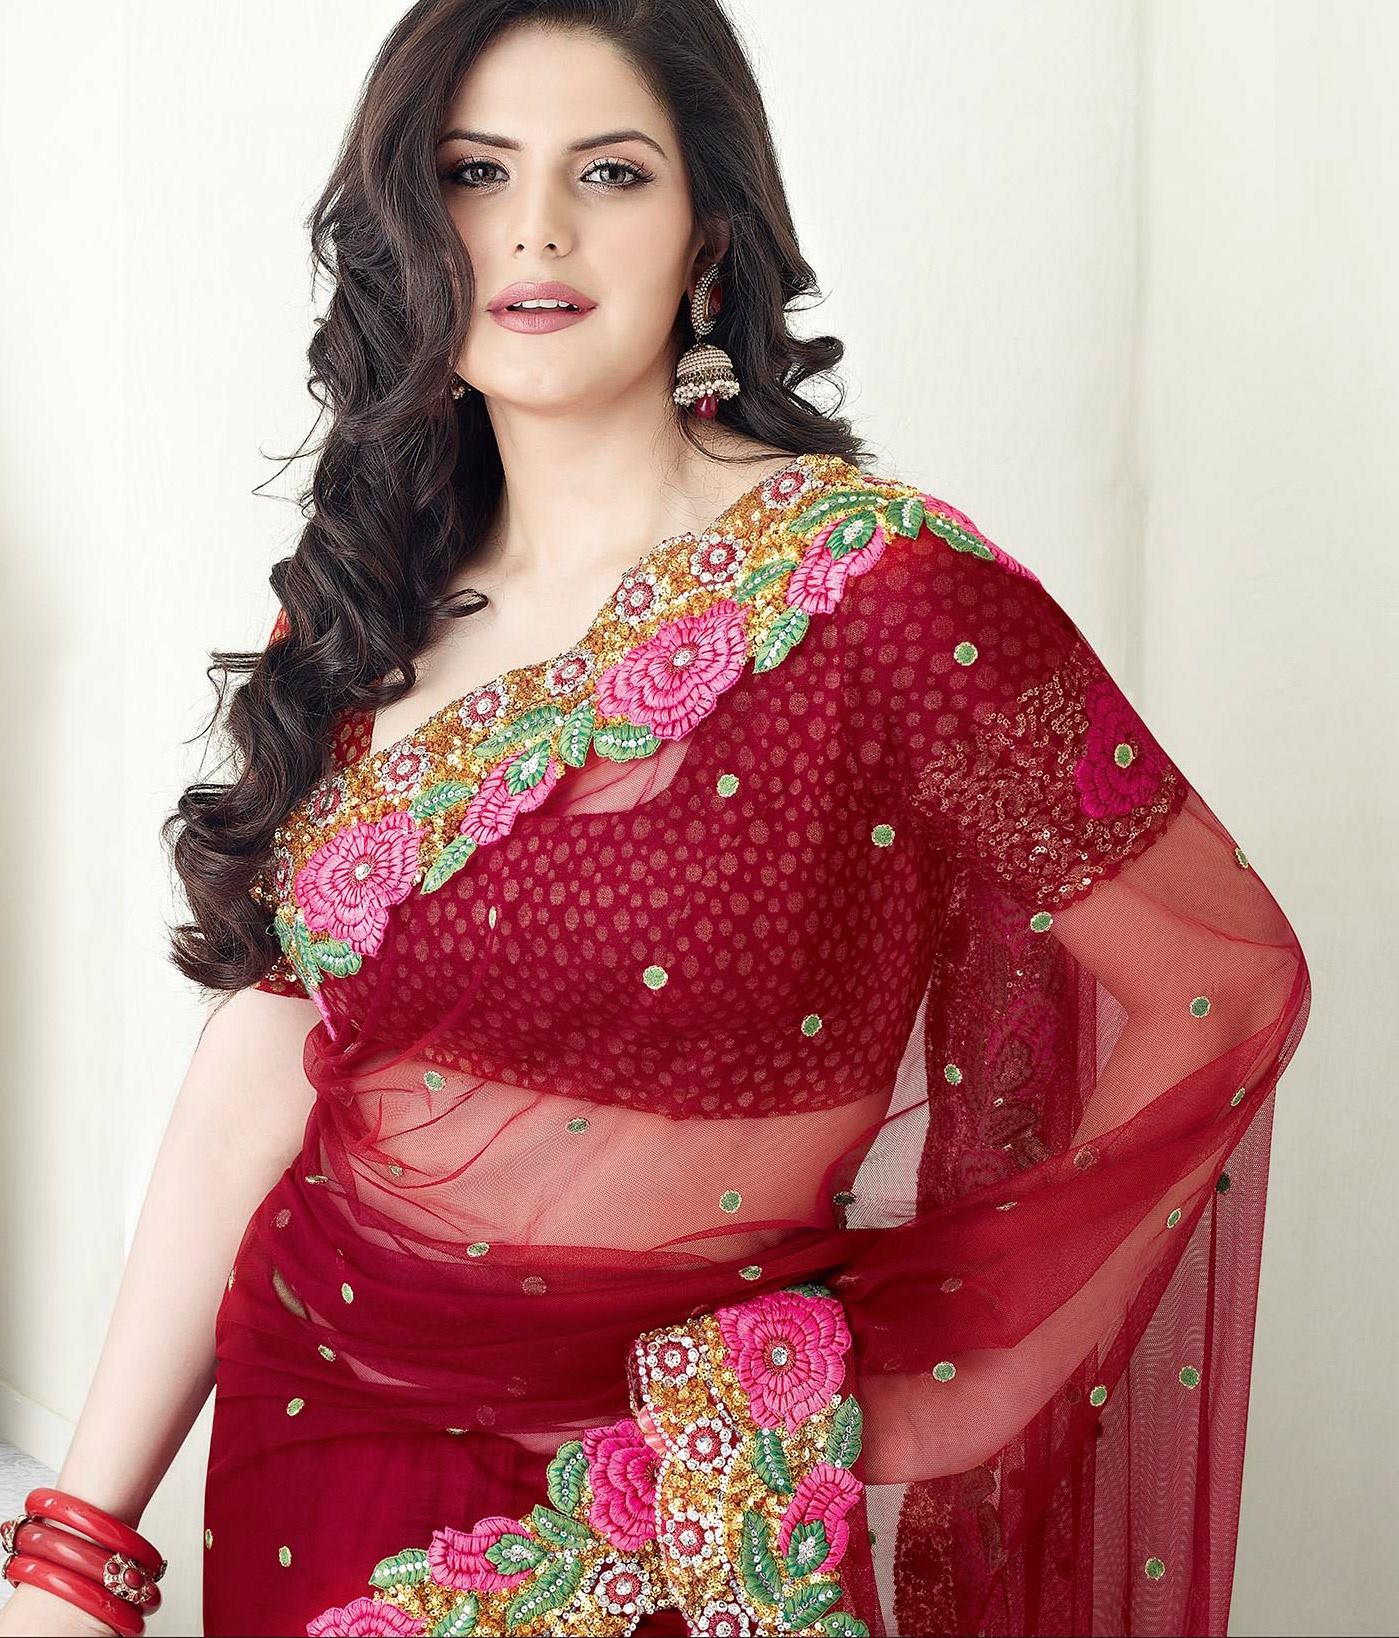 Punjabi Actress Saree desktop wallpaper, free desktop Wallpaper